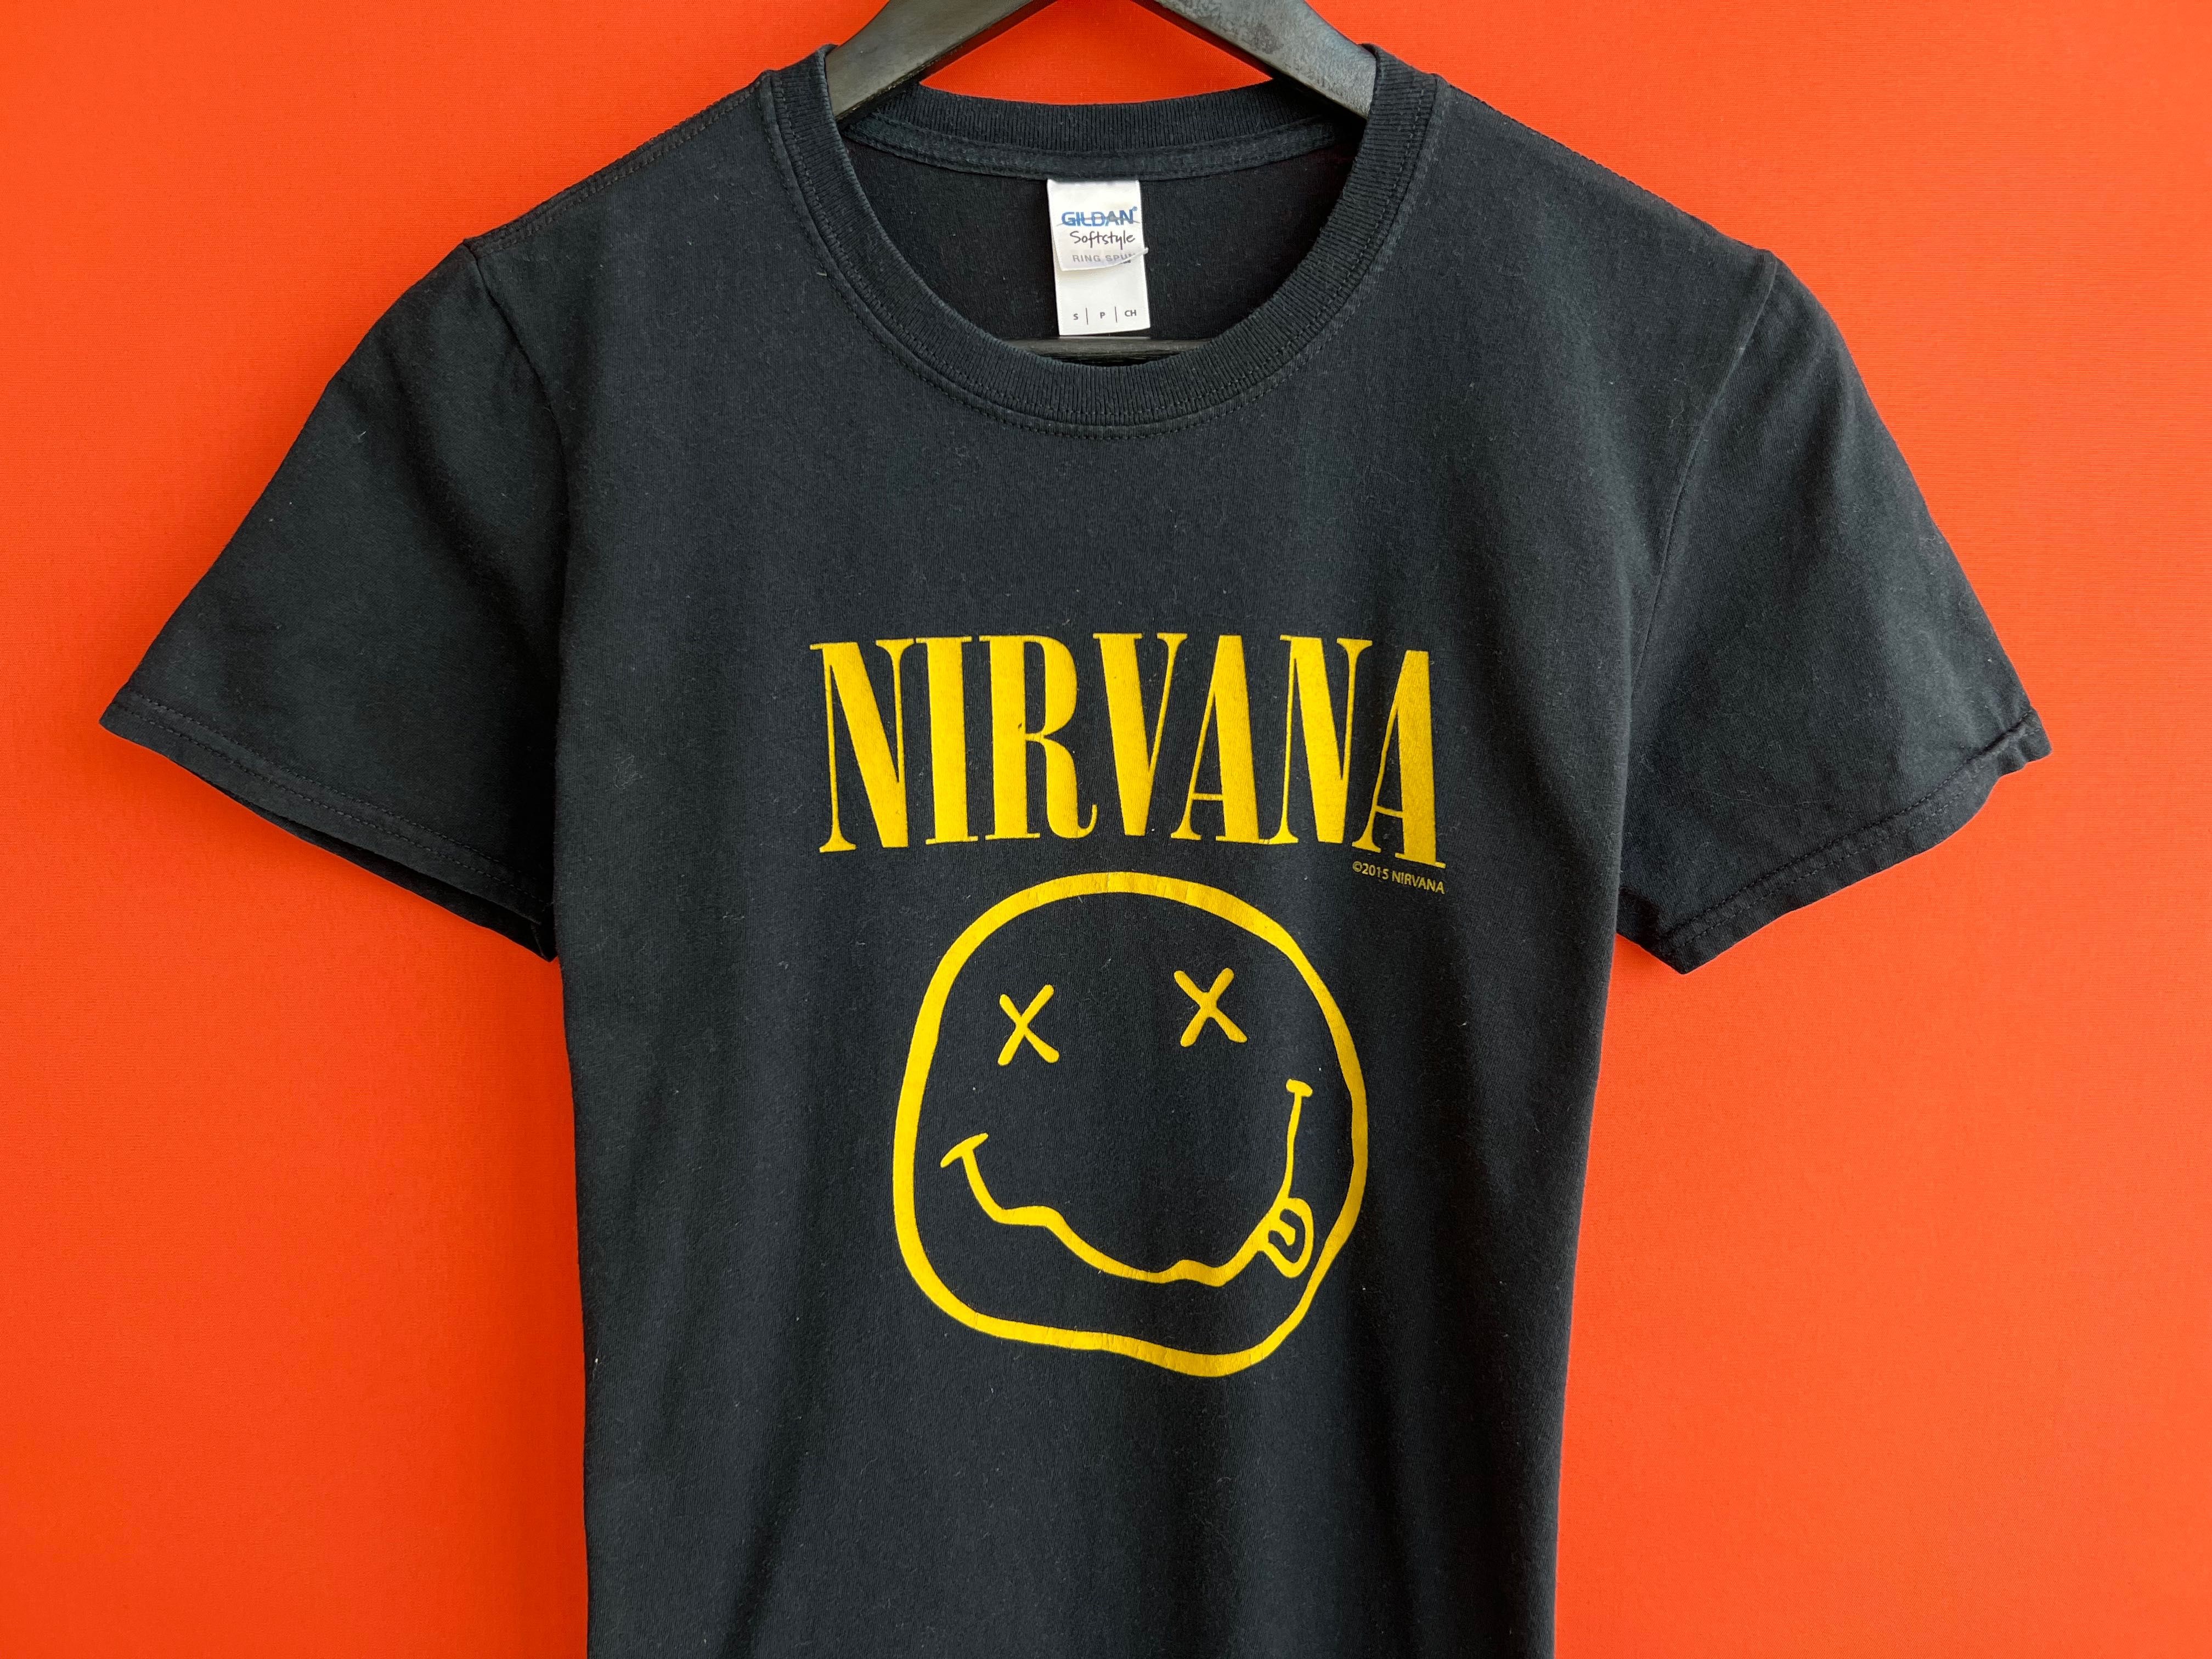 Nirvana Vintage Merch оригинал мужская футболка мерч размер S Б У